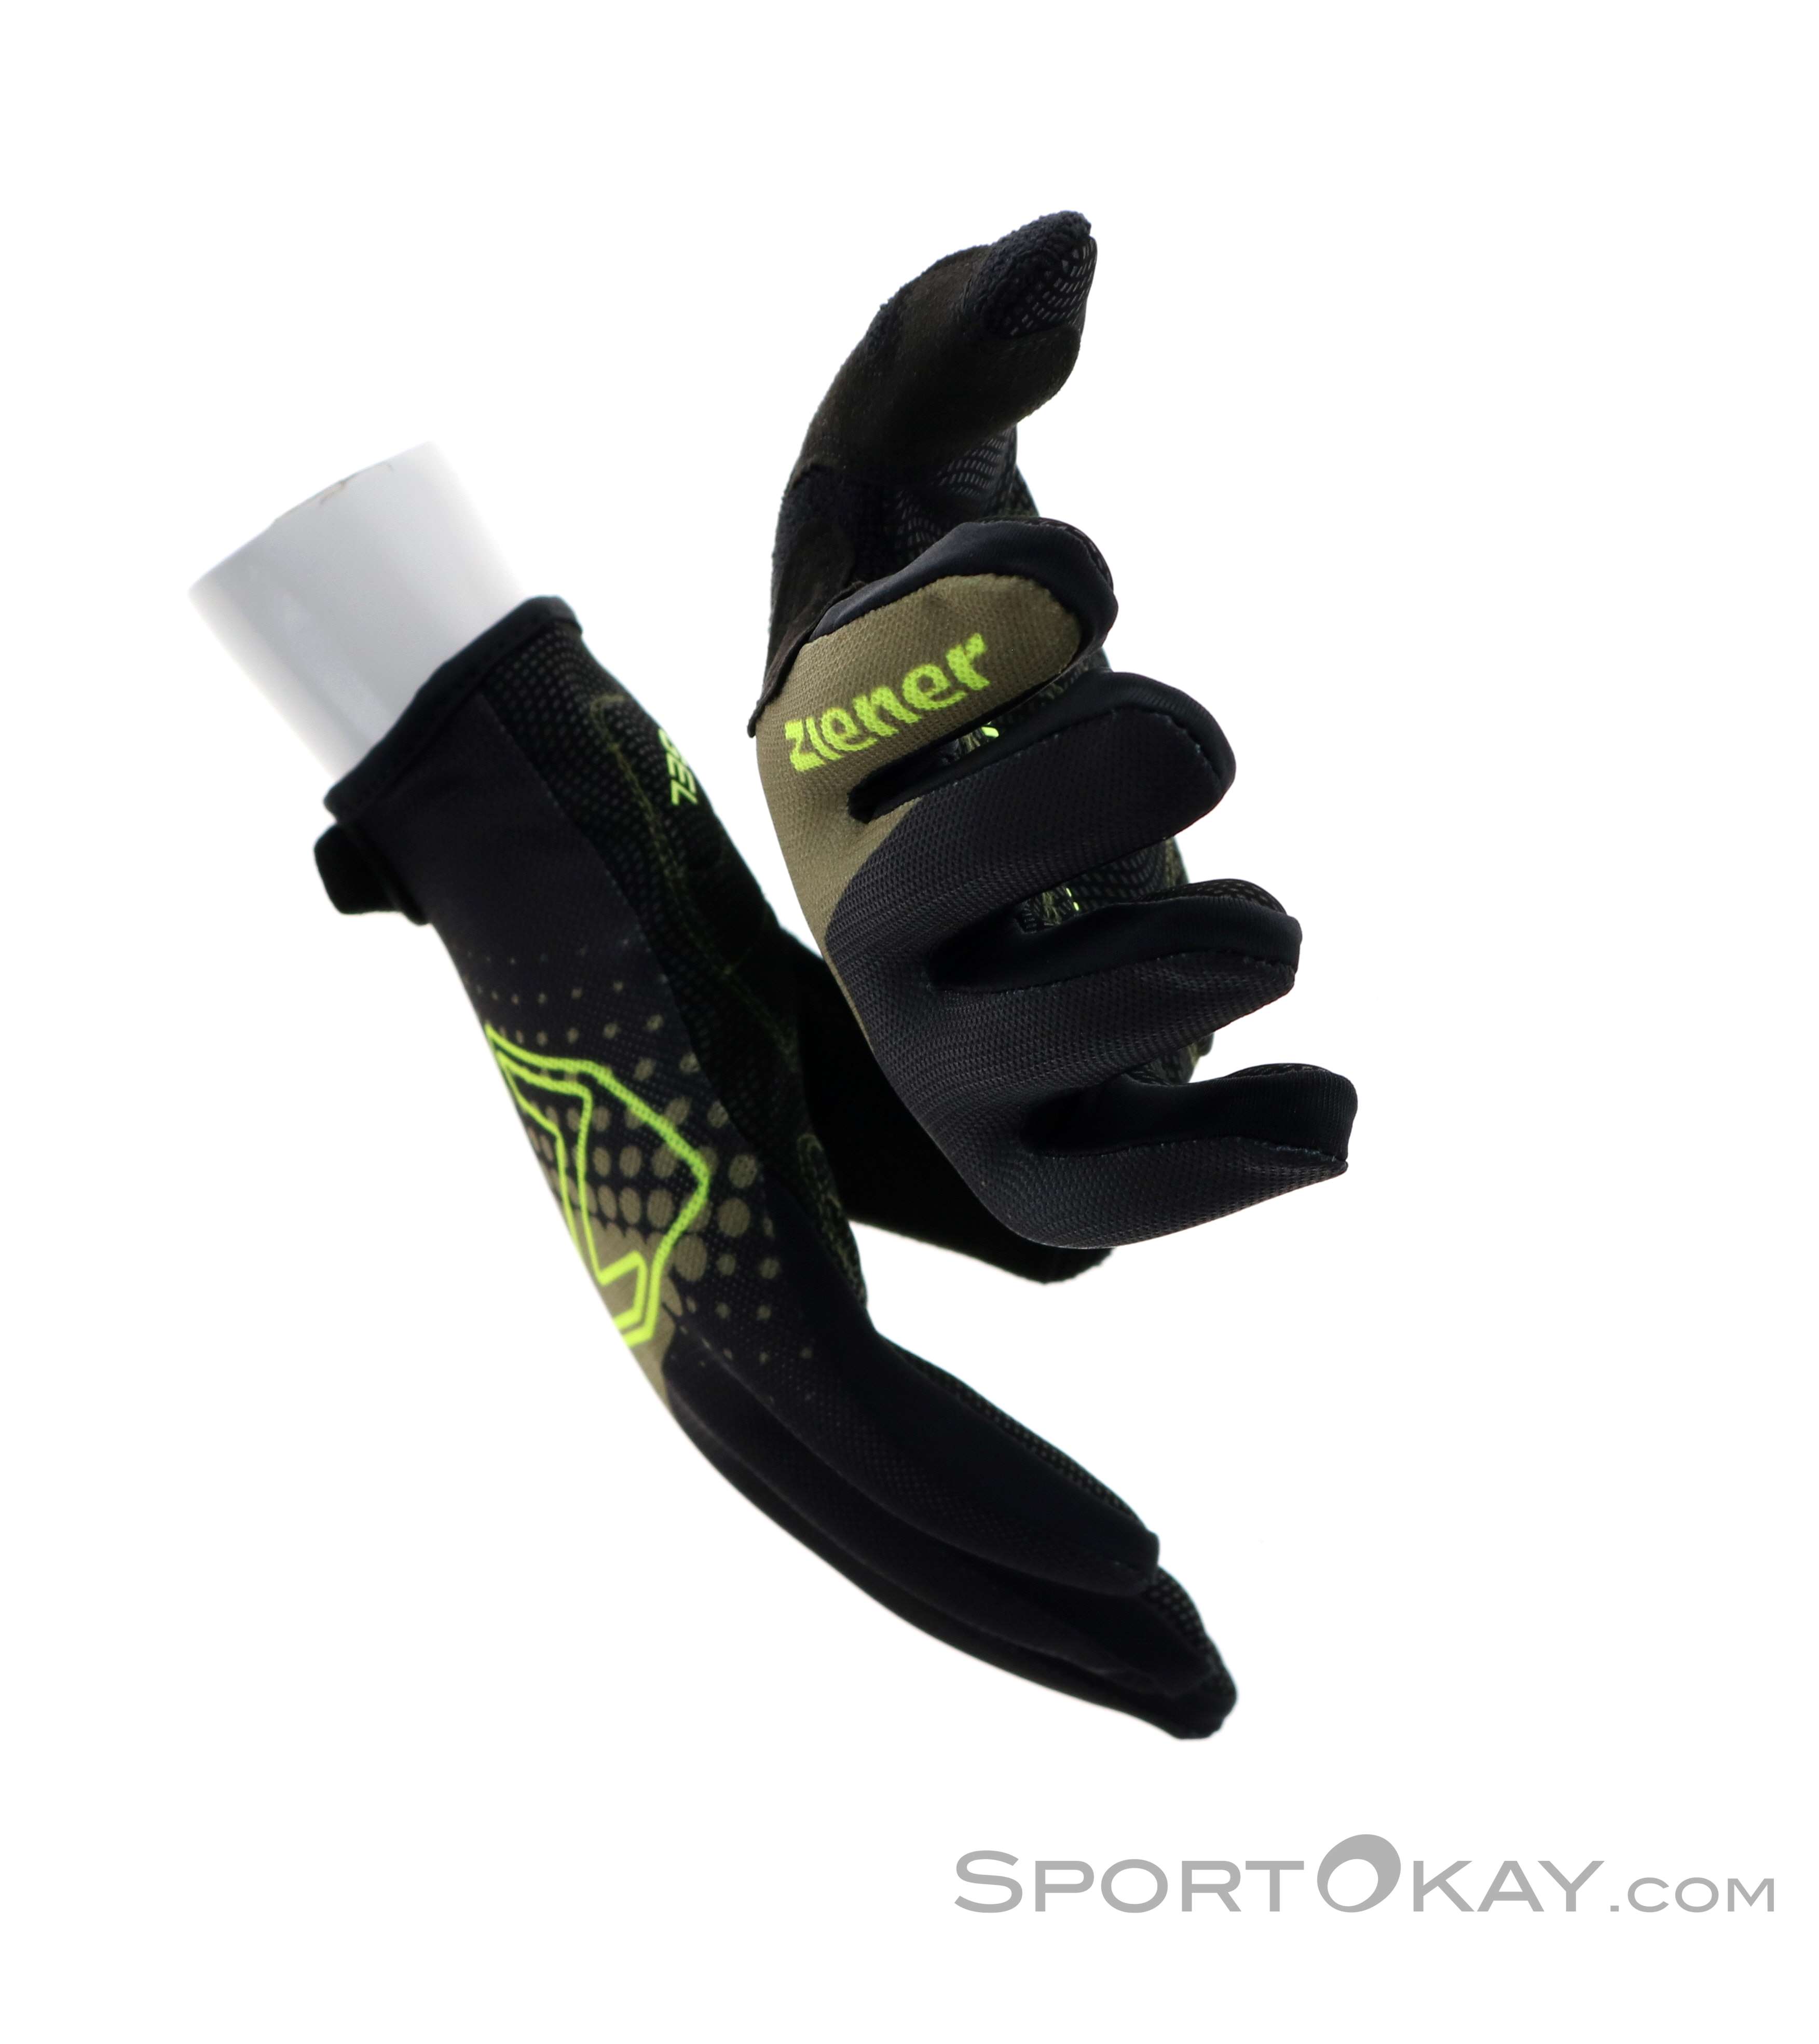 All Biking Gloves Clothing - - - Ziener - Gloves Bike Long Colo Bike Kids